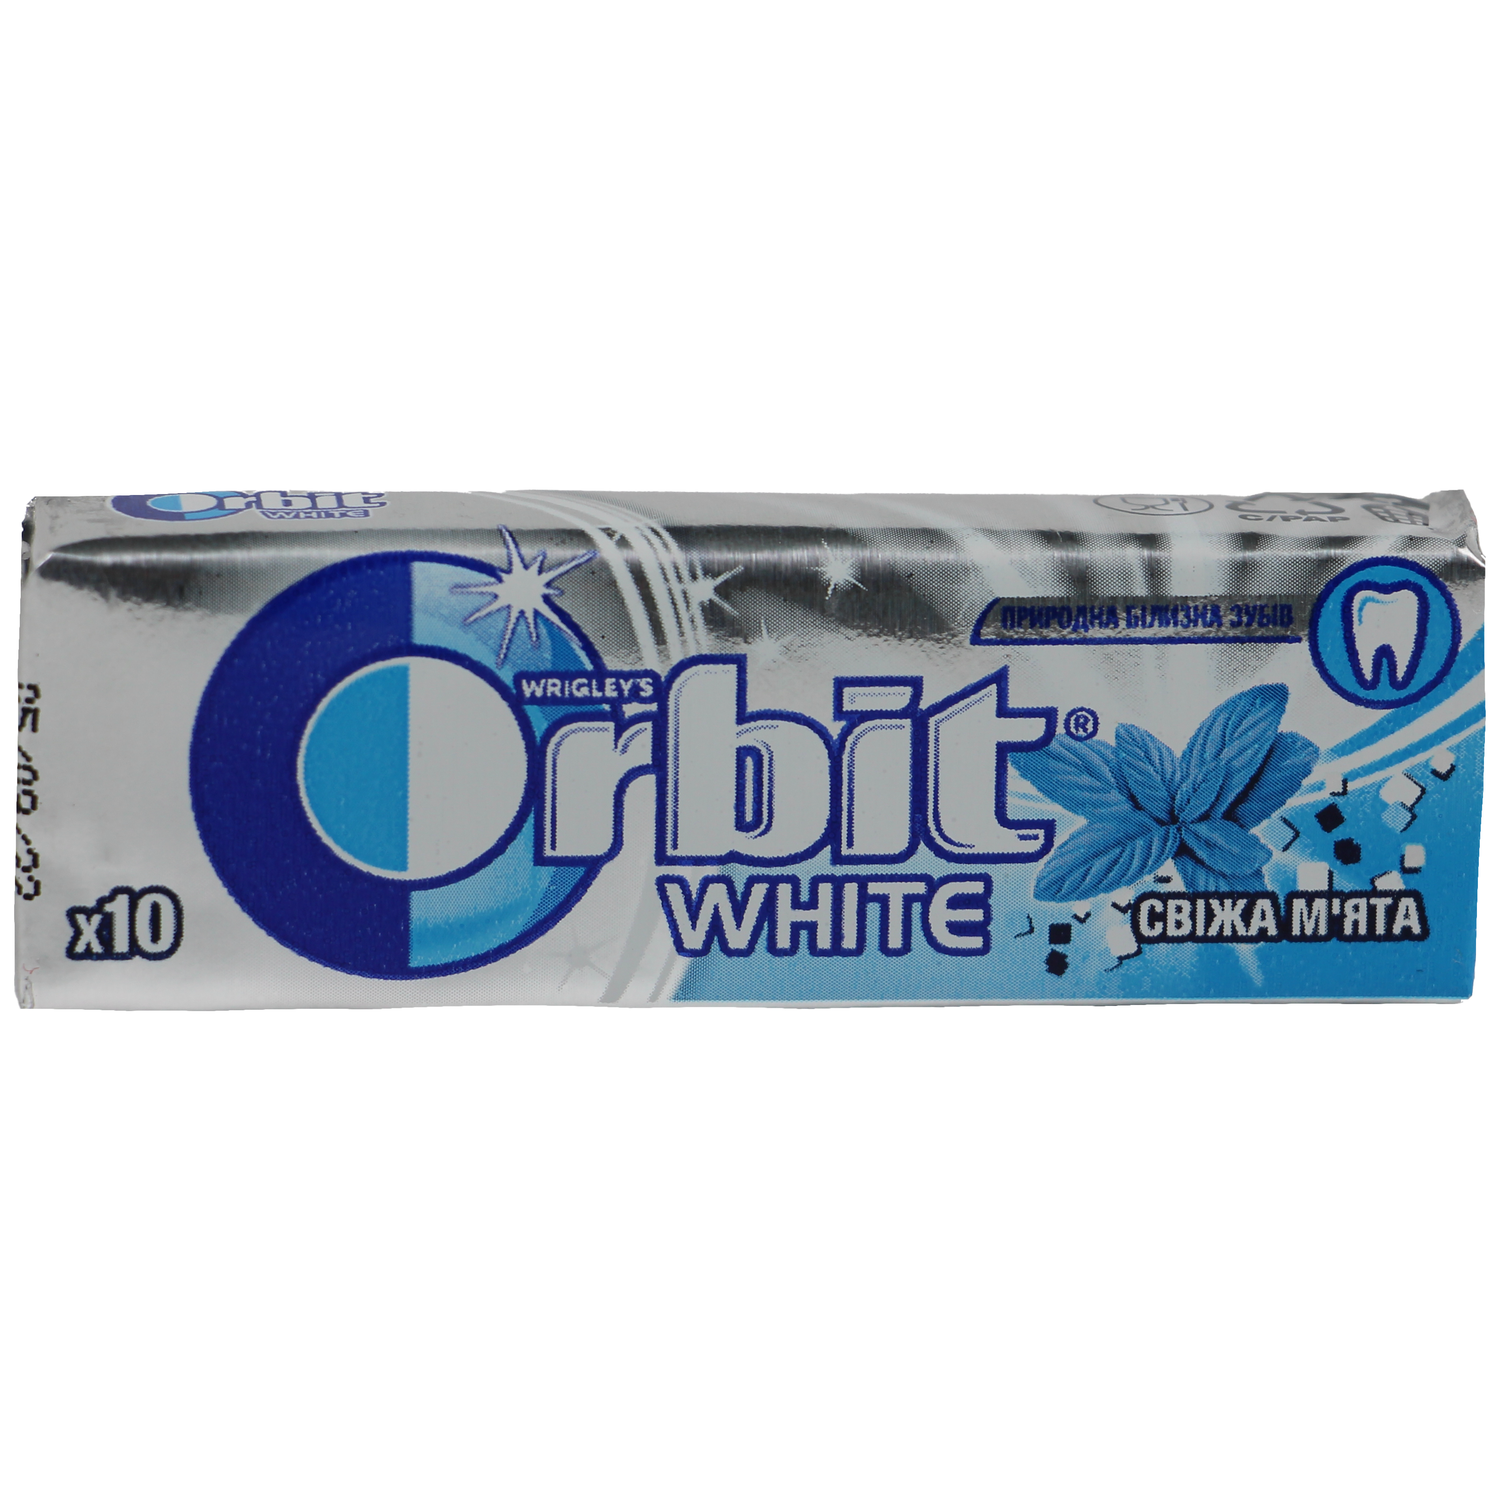 Orbit White Freshmint Chewing Gum 14g